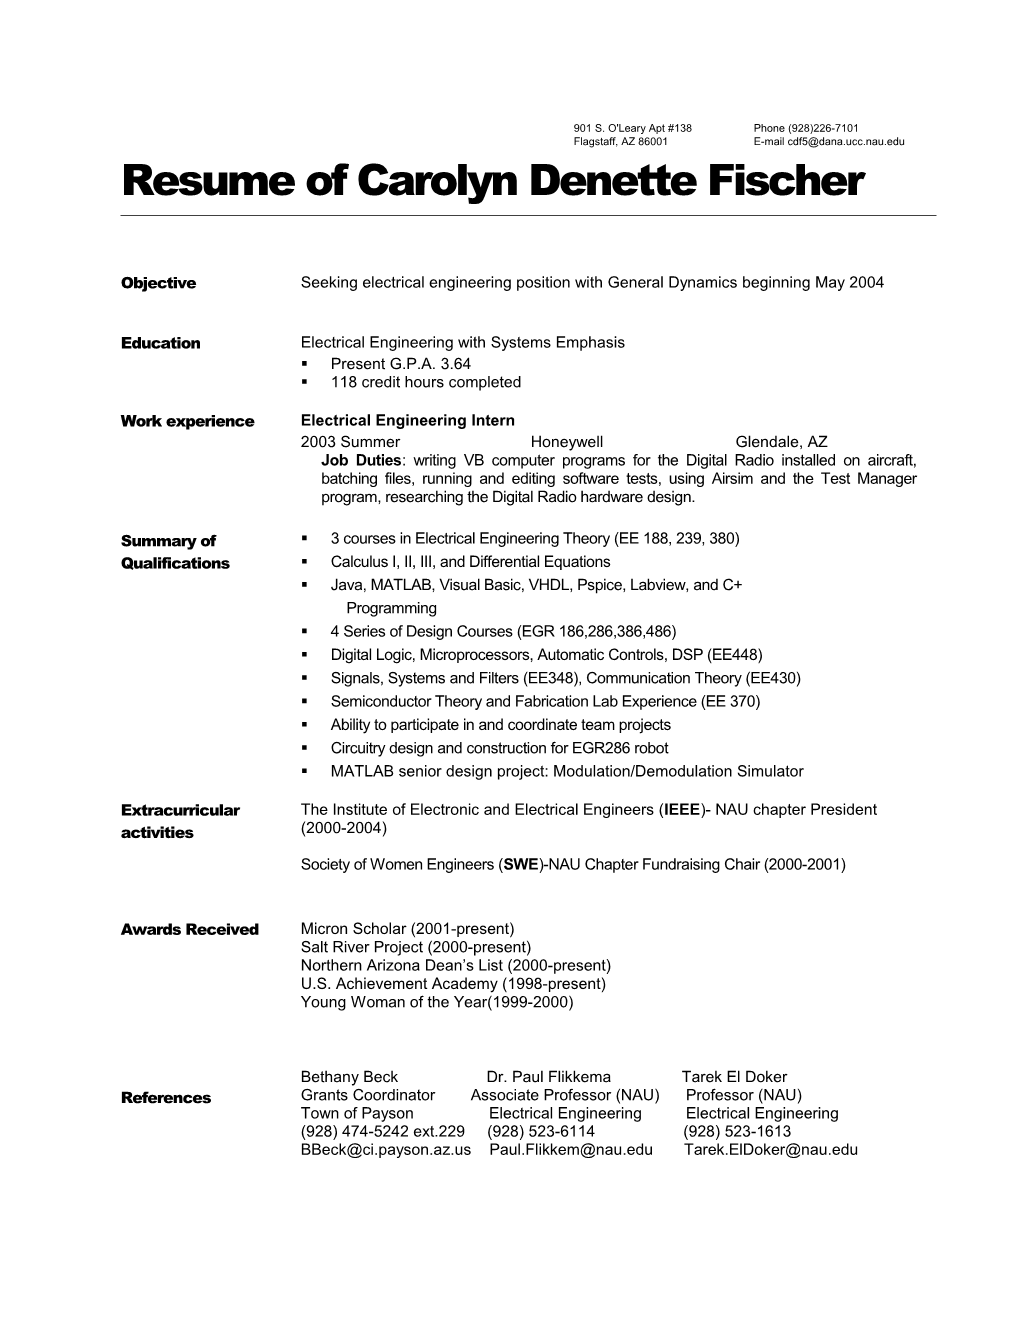 Resume of Carolyn Denette Fischer